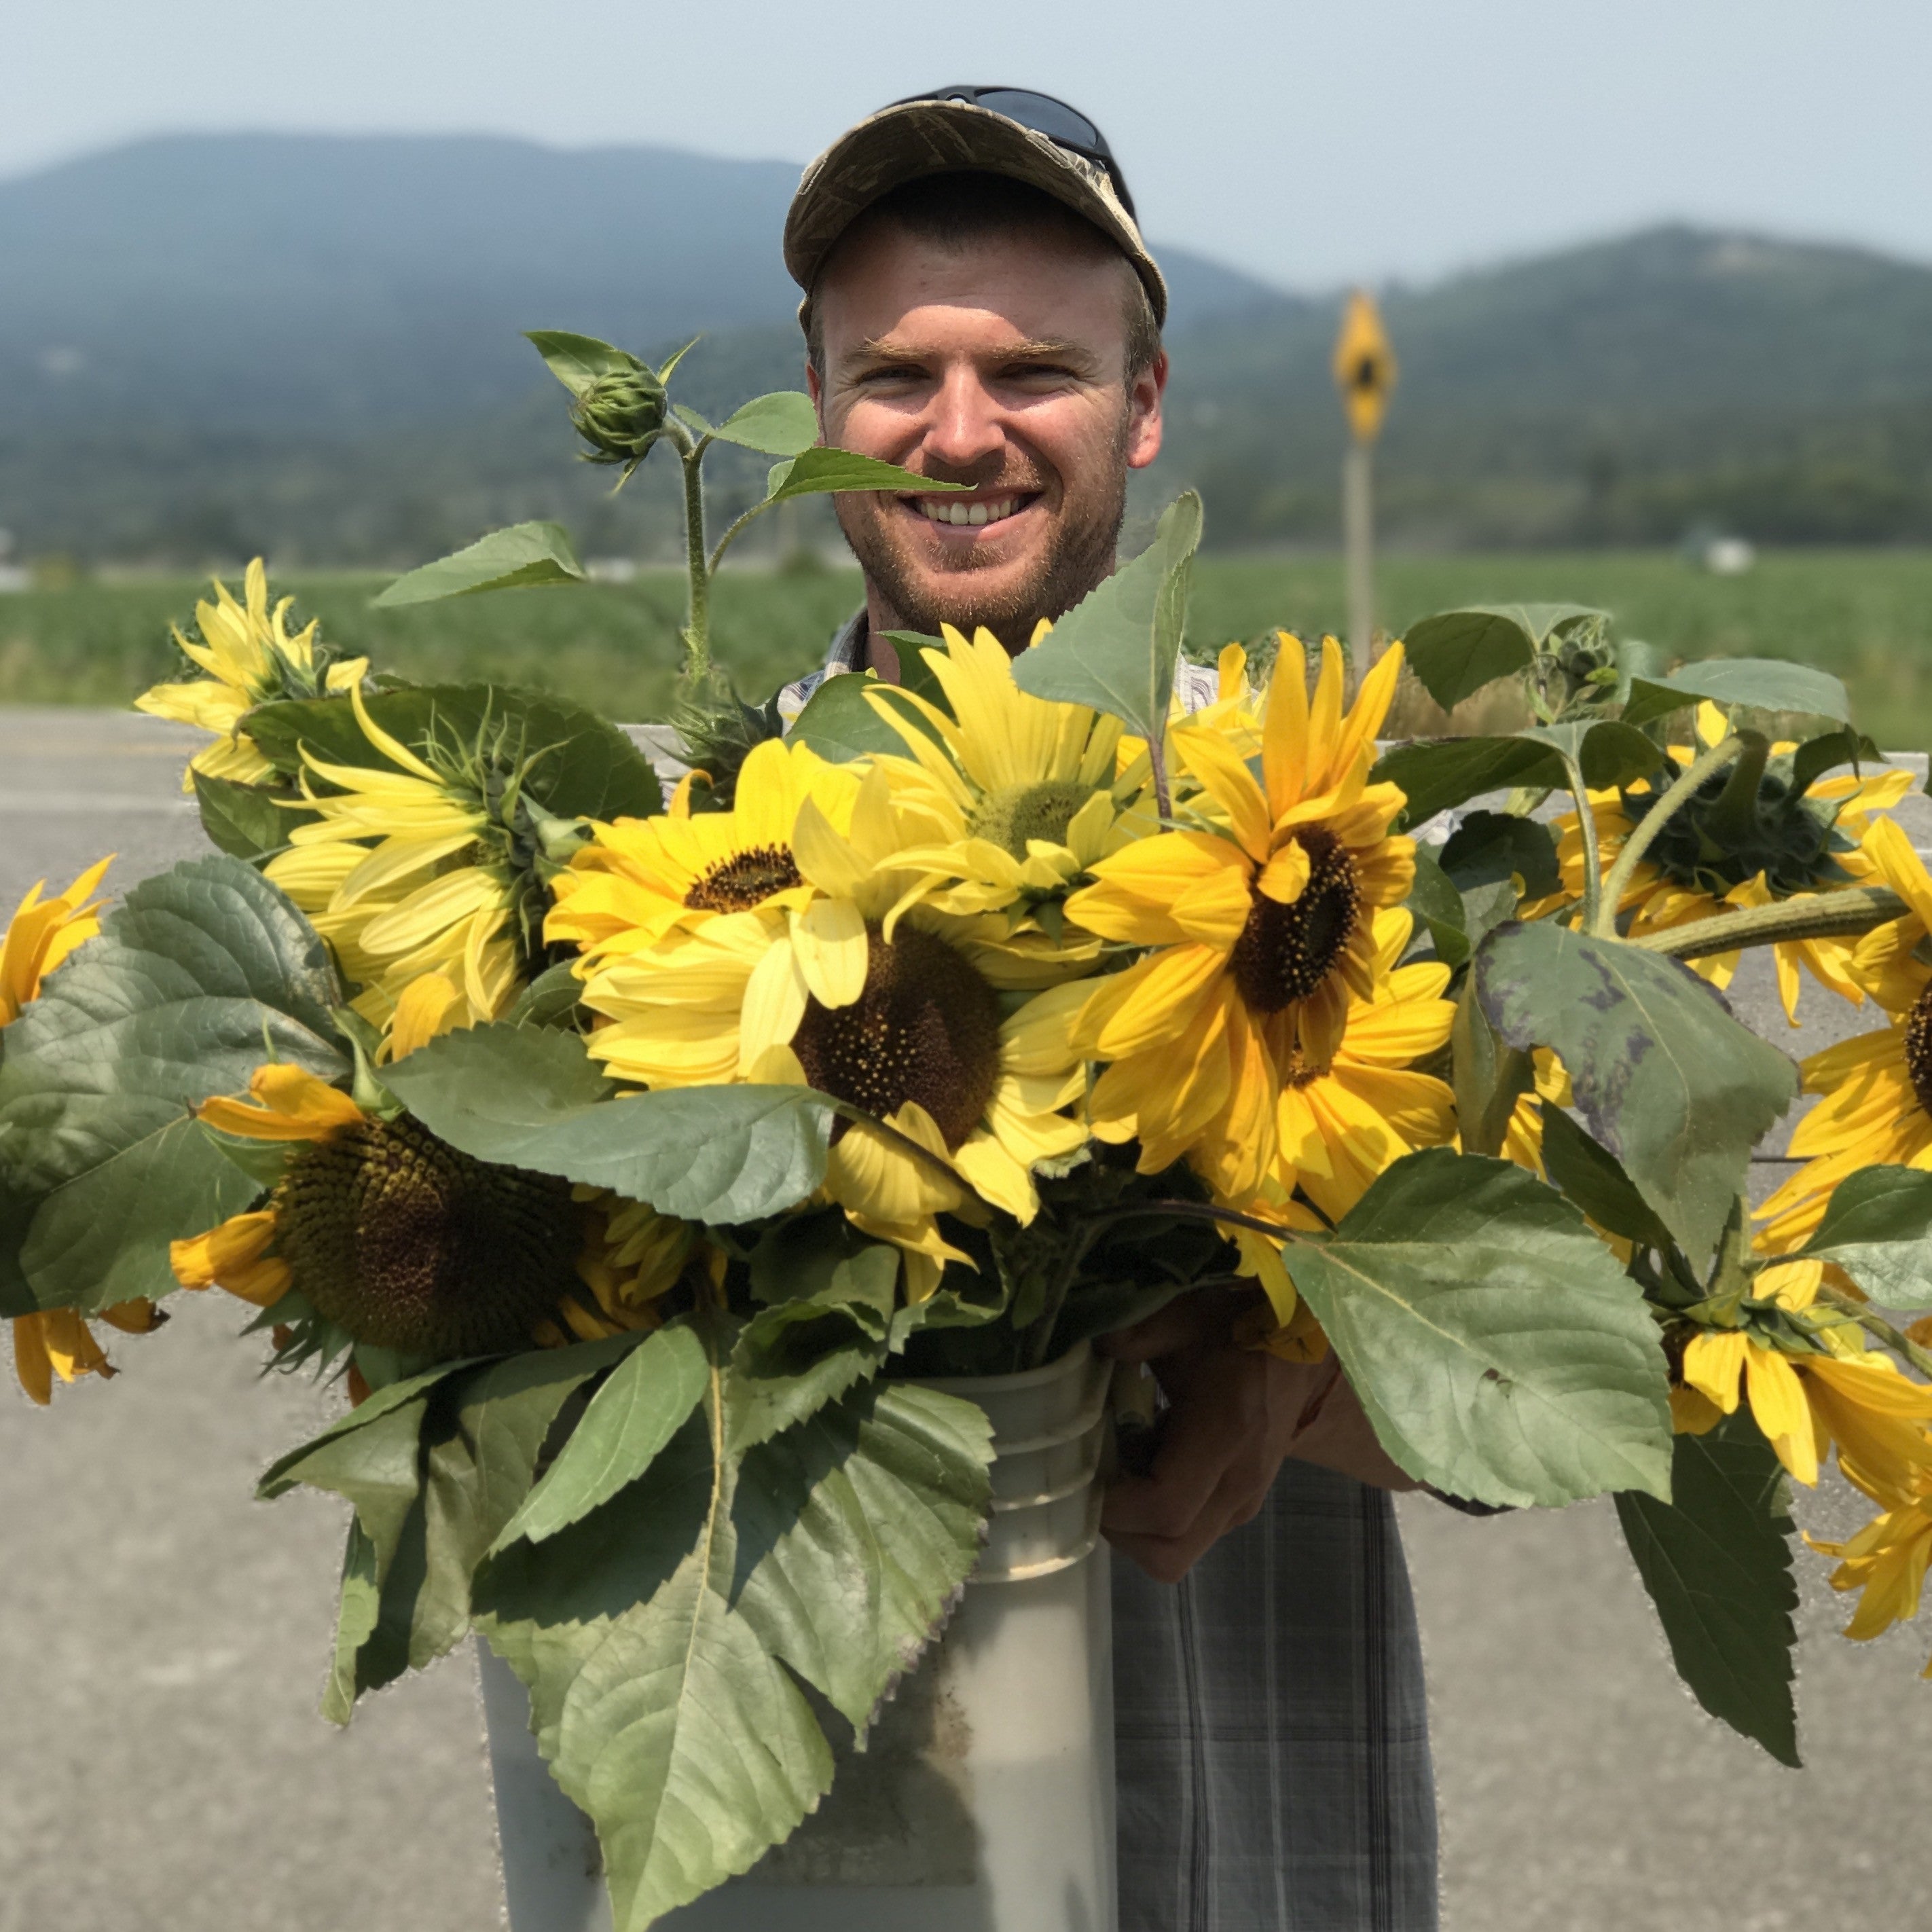 David & the Sunflowers